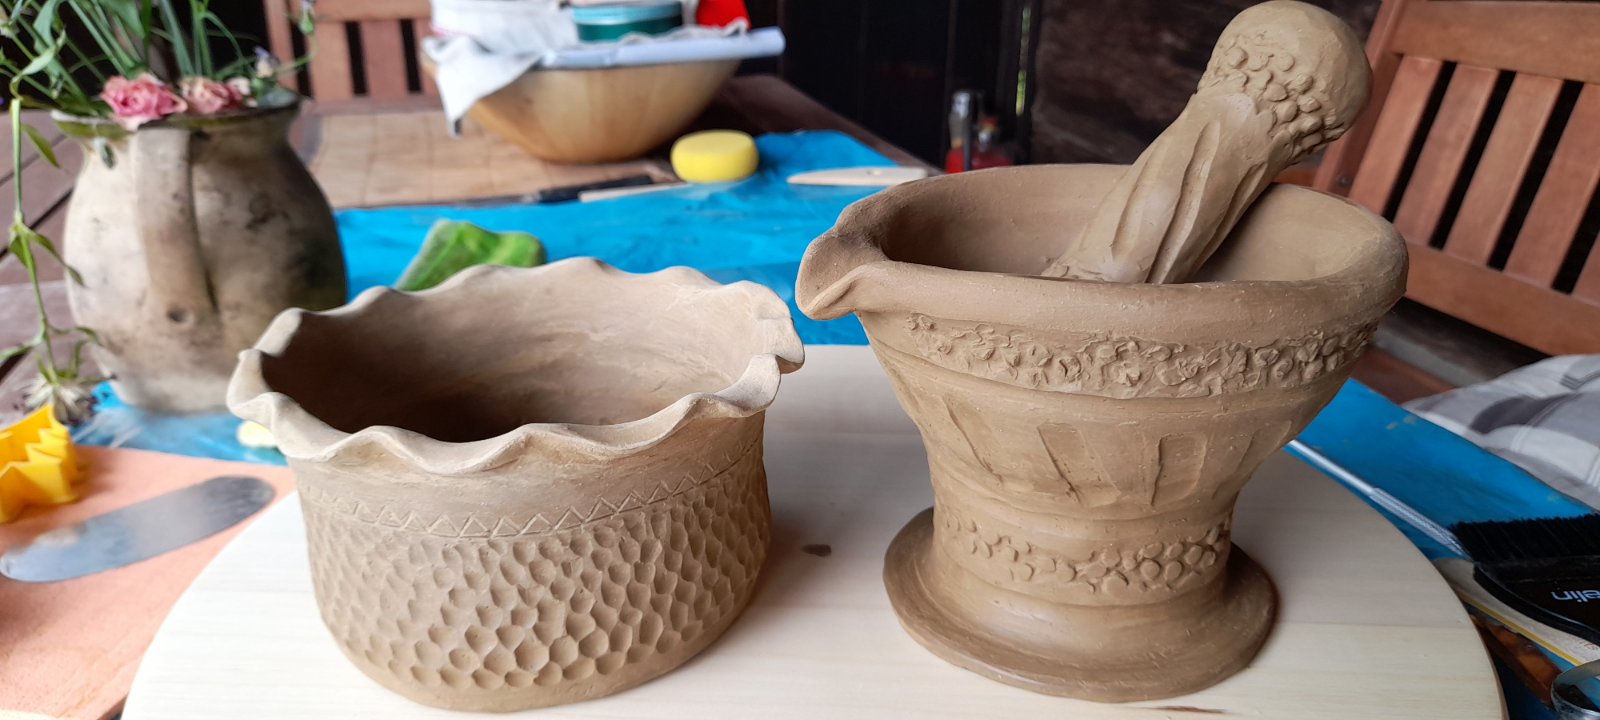 Oduševljeni smo prvim radovima polaznika online tečaja keramike!